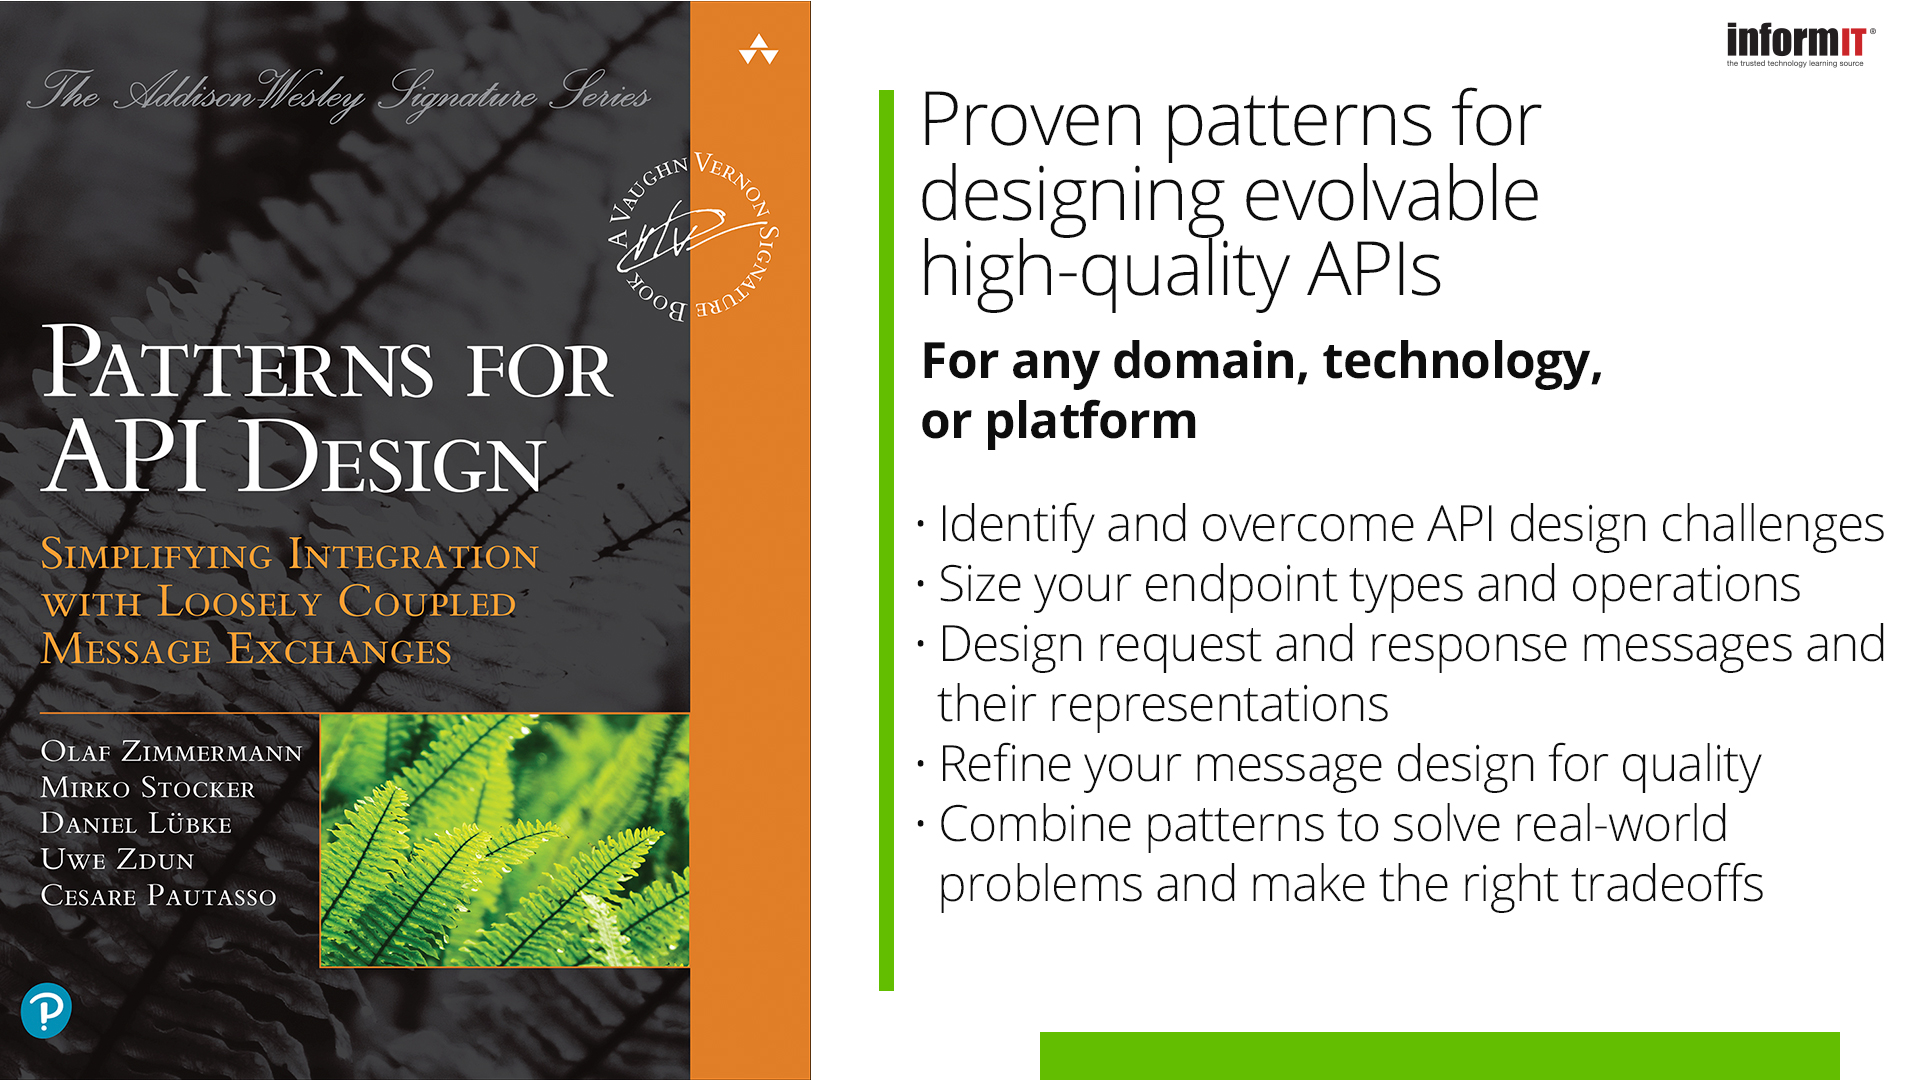 Article Series 'API Design Pattern of the Week'